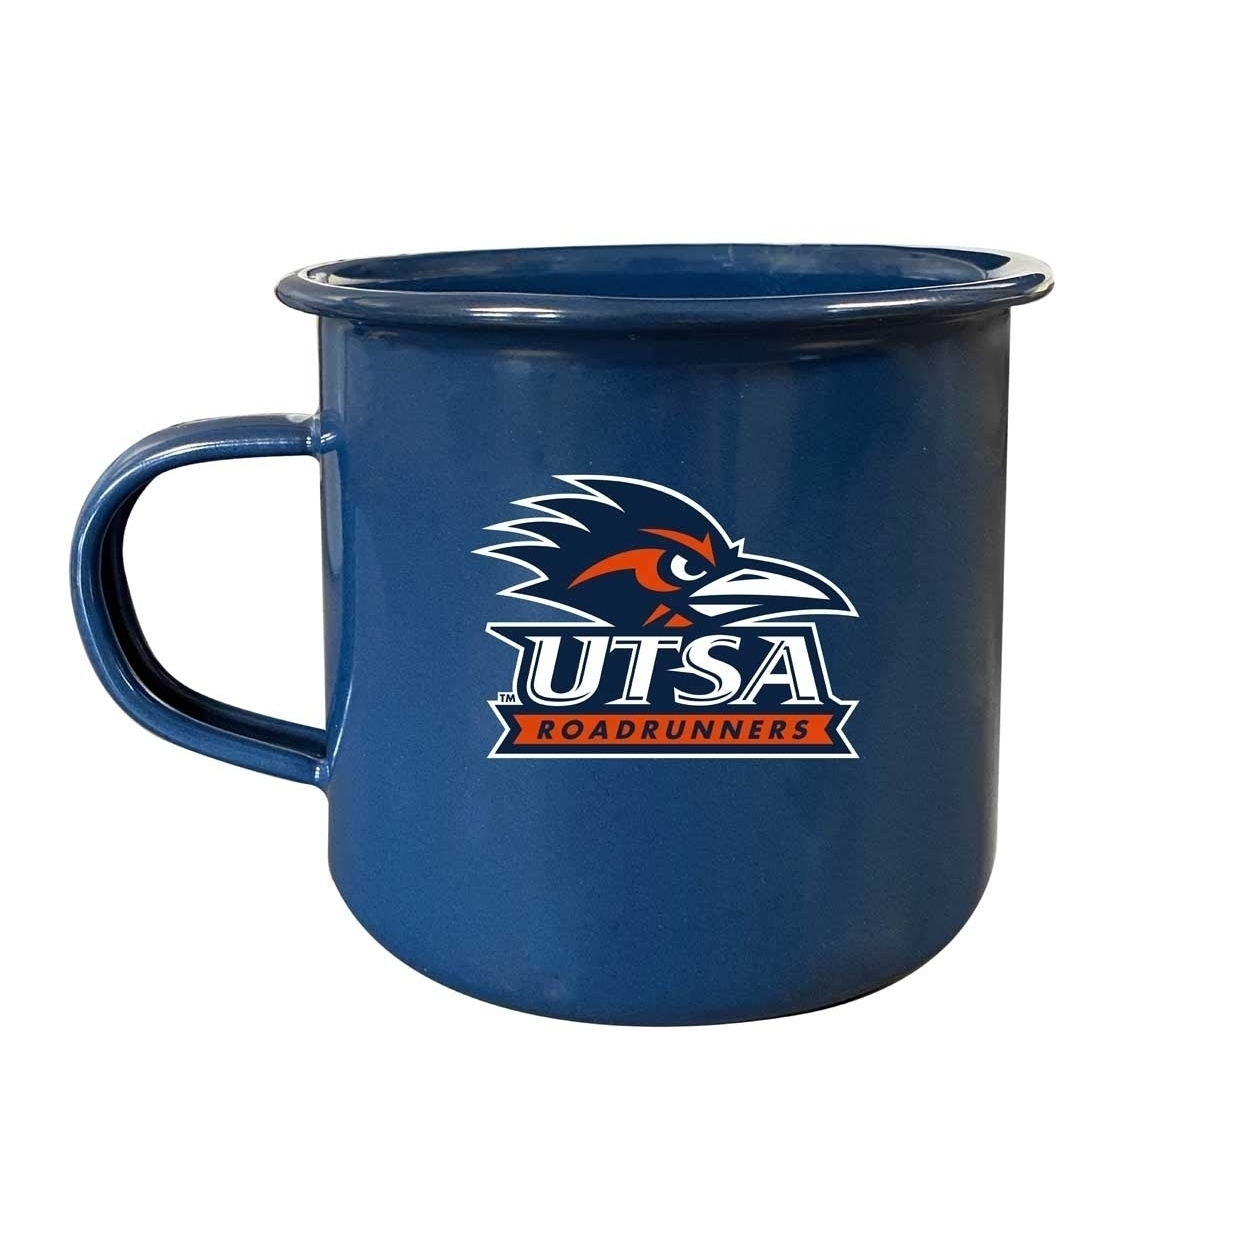 UTSA Road Runners Tin Camper Coffee Mug - Choose Your Color - Navy